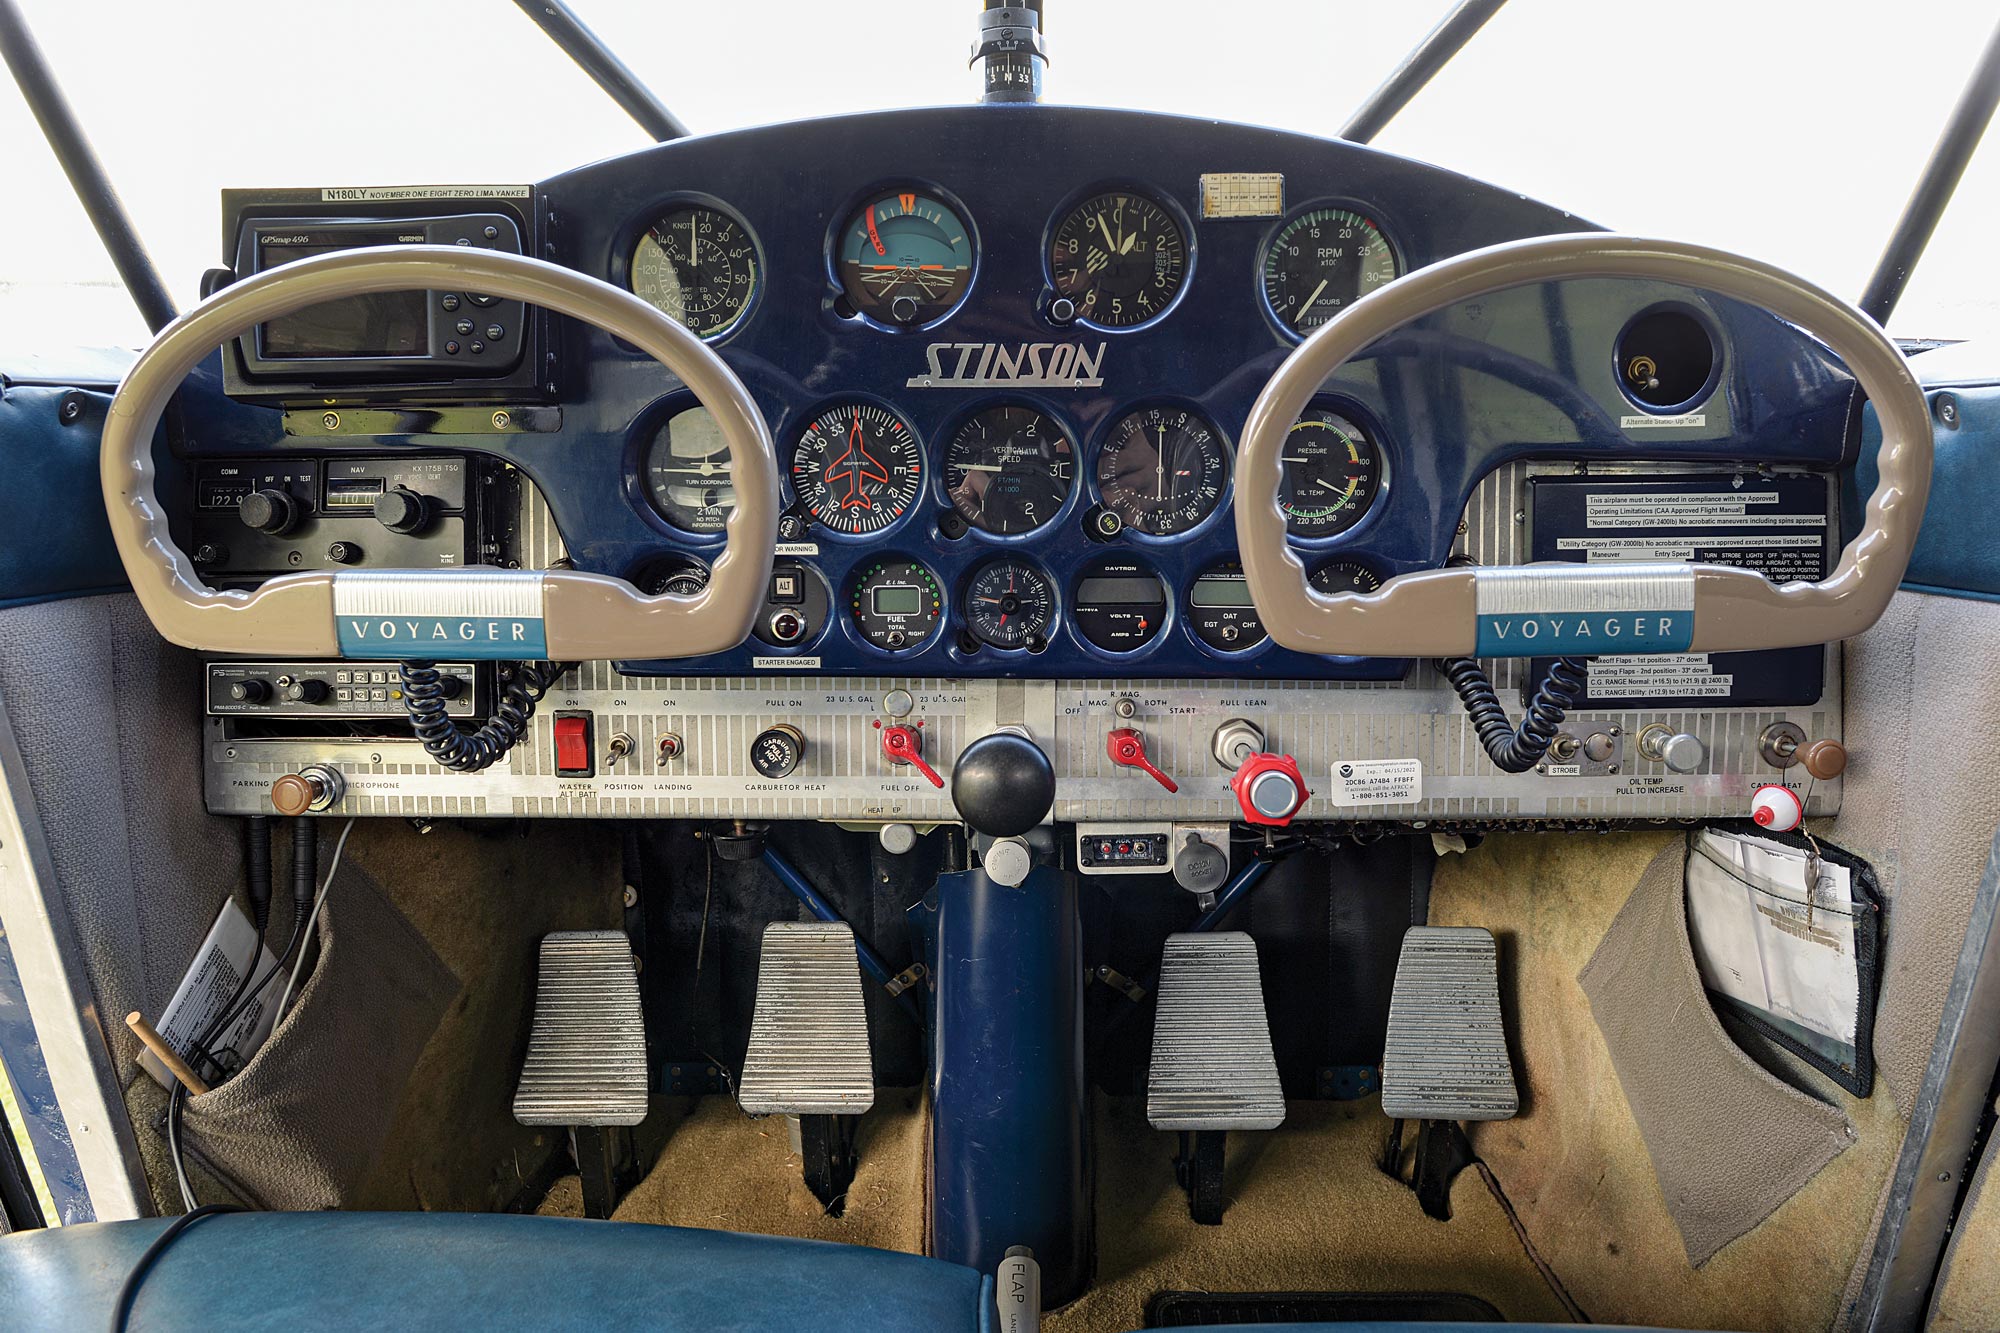 Stinson 108 classic aircraft cockpit